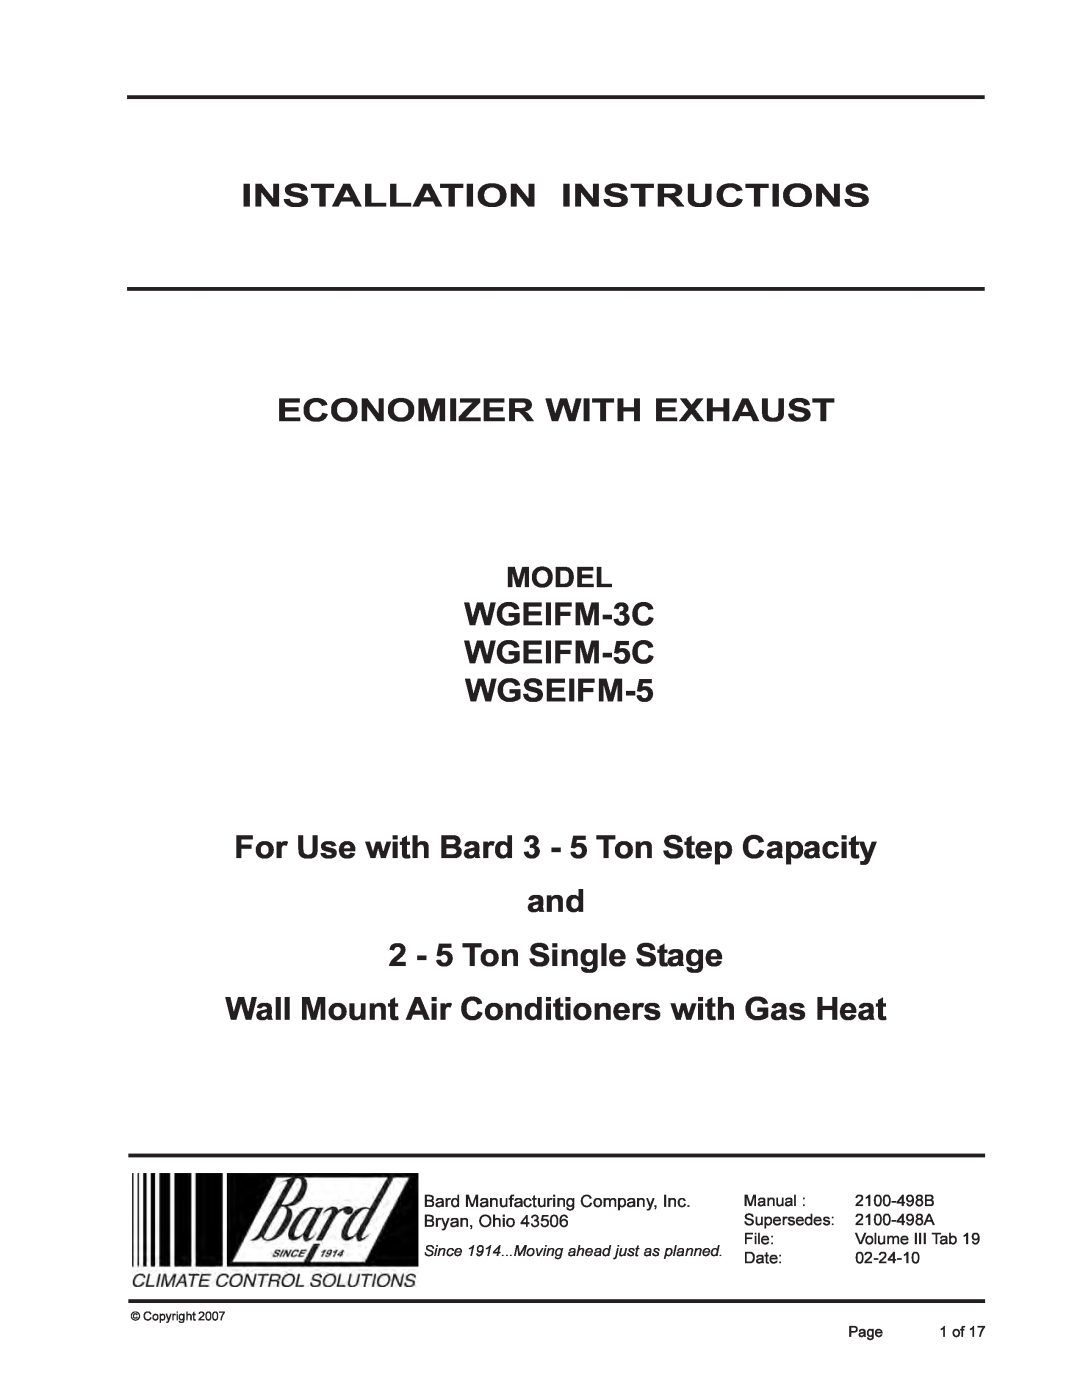 Bard installation instructions Installation Instructions Economizer With Exhaust, WGEIFM-3C WGEIFM-5C WGSEIFM-5, Model 